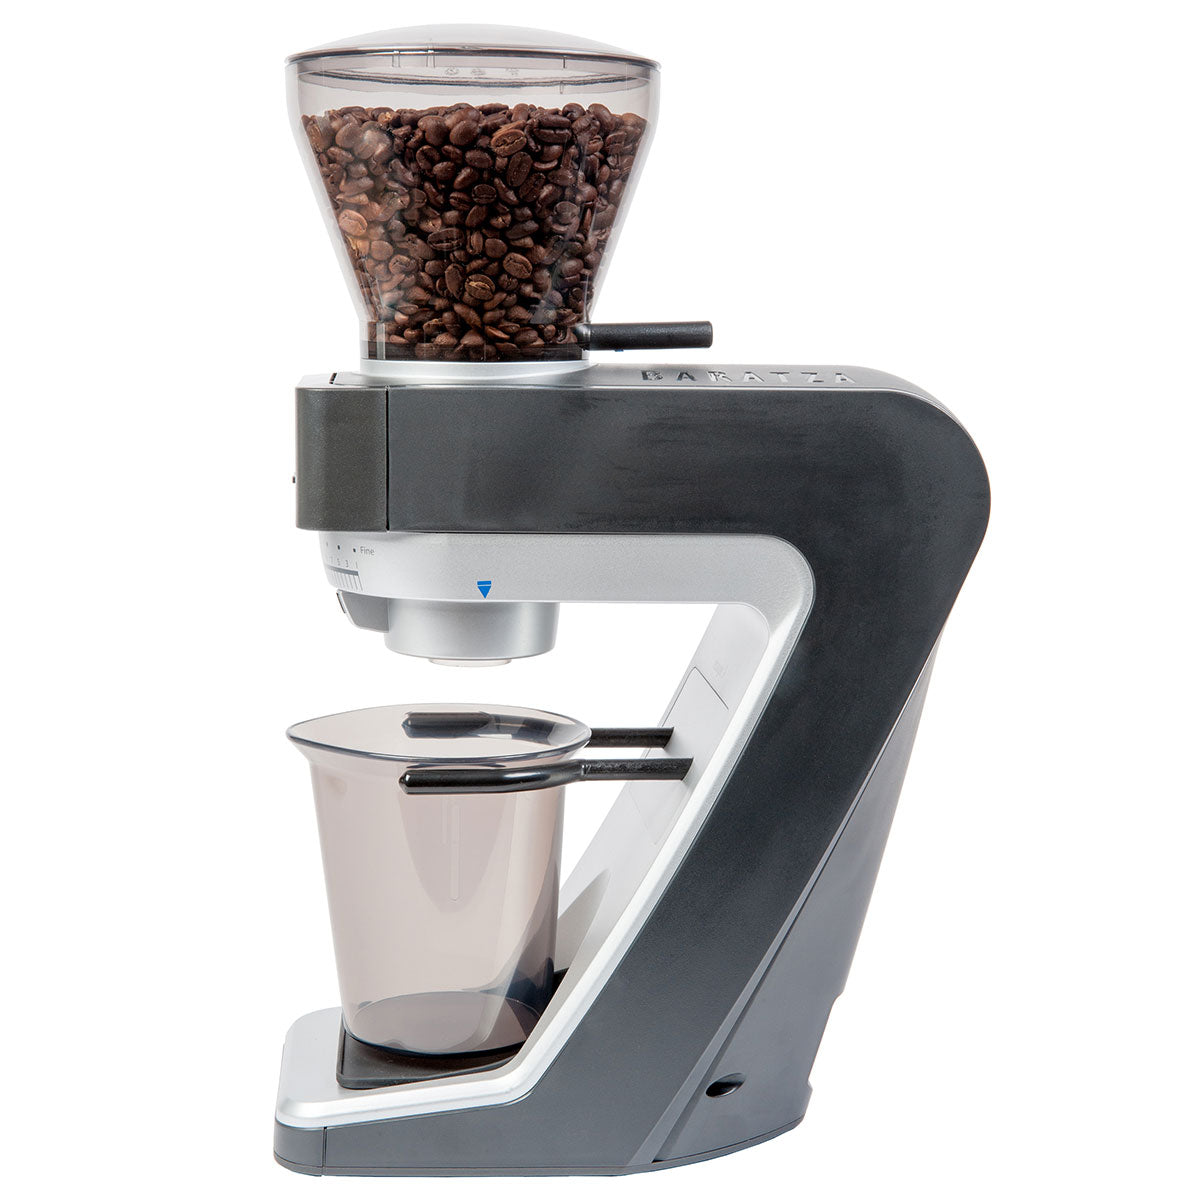 Baratza Sette 30 Espresso Grinder – Whole Latte Love